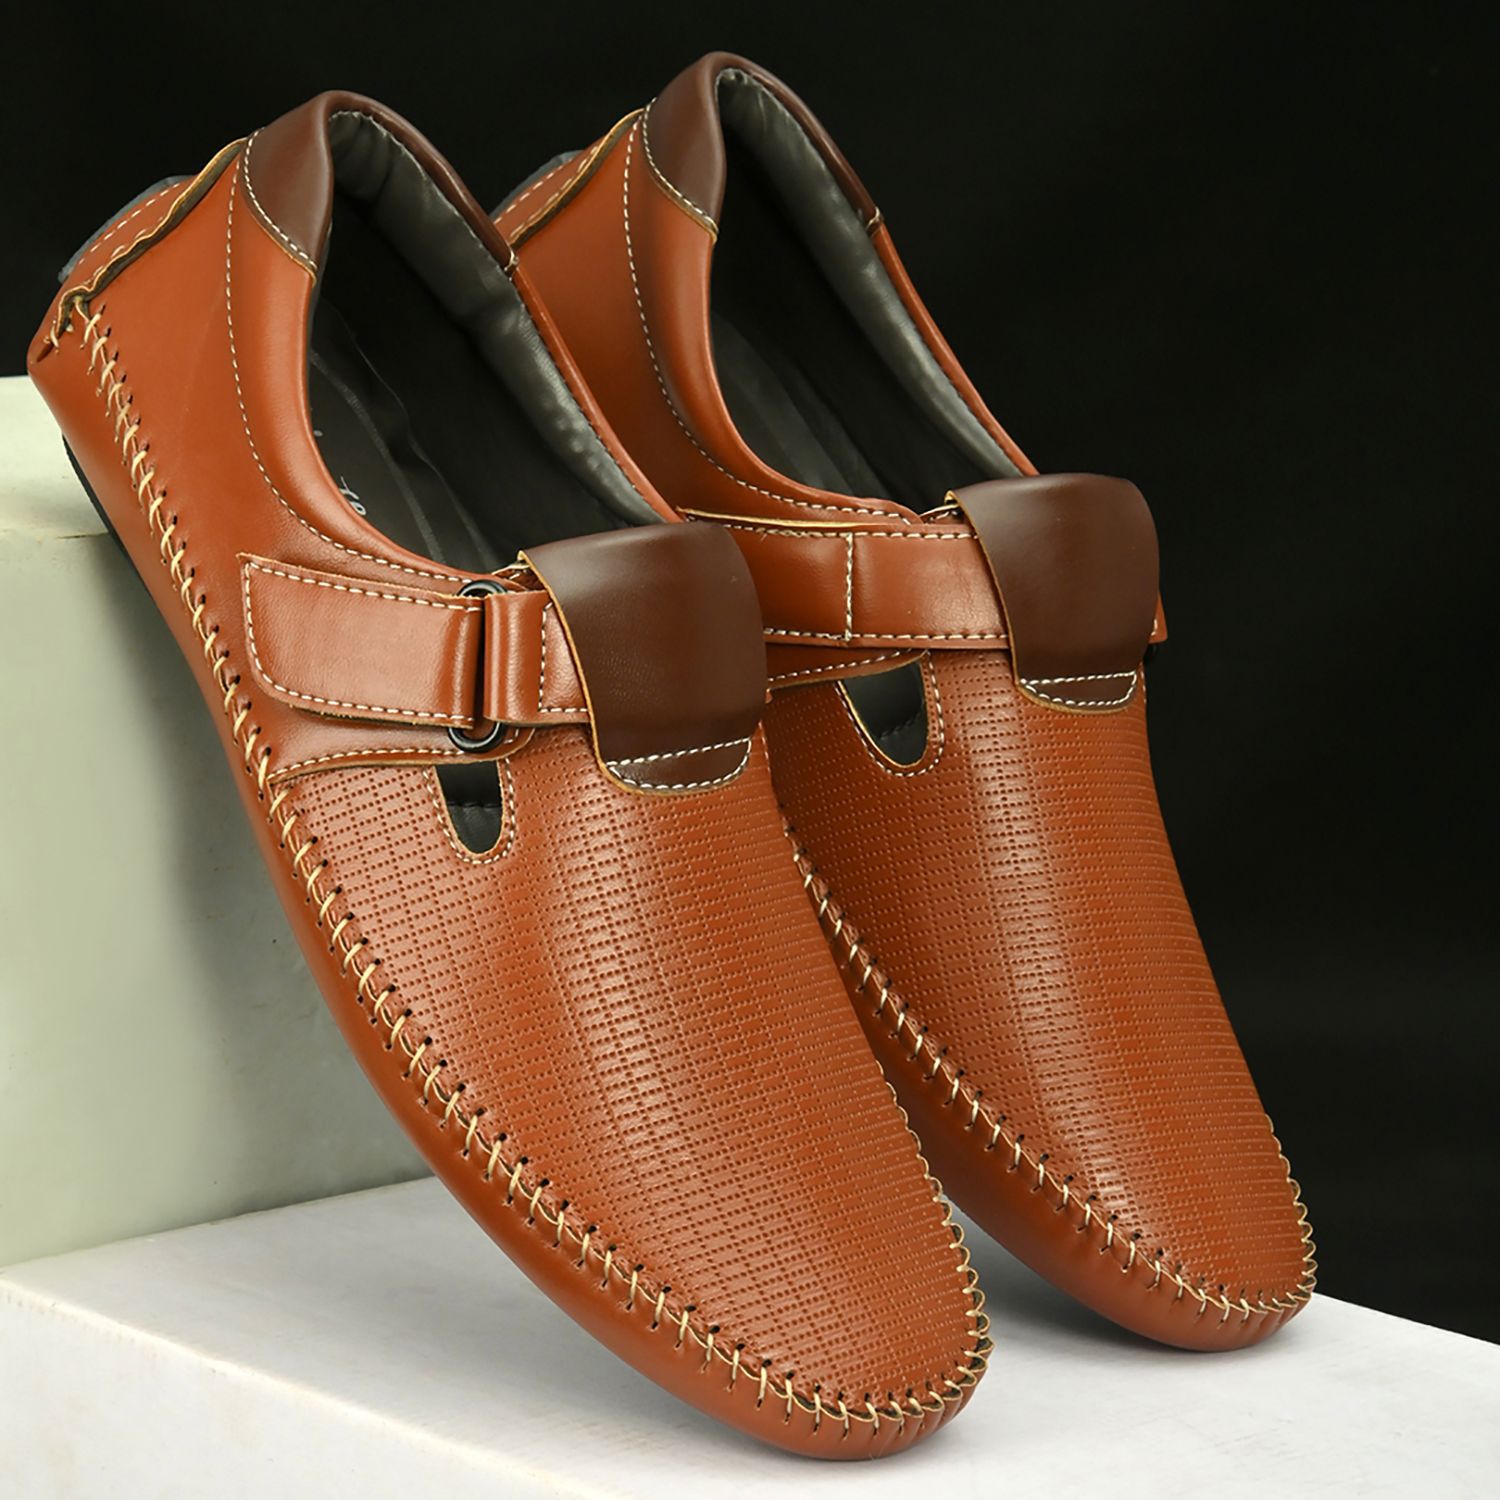     			John Karsun Tan Synthetic Leather Sandals